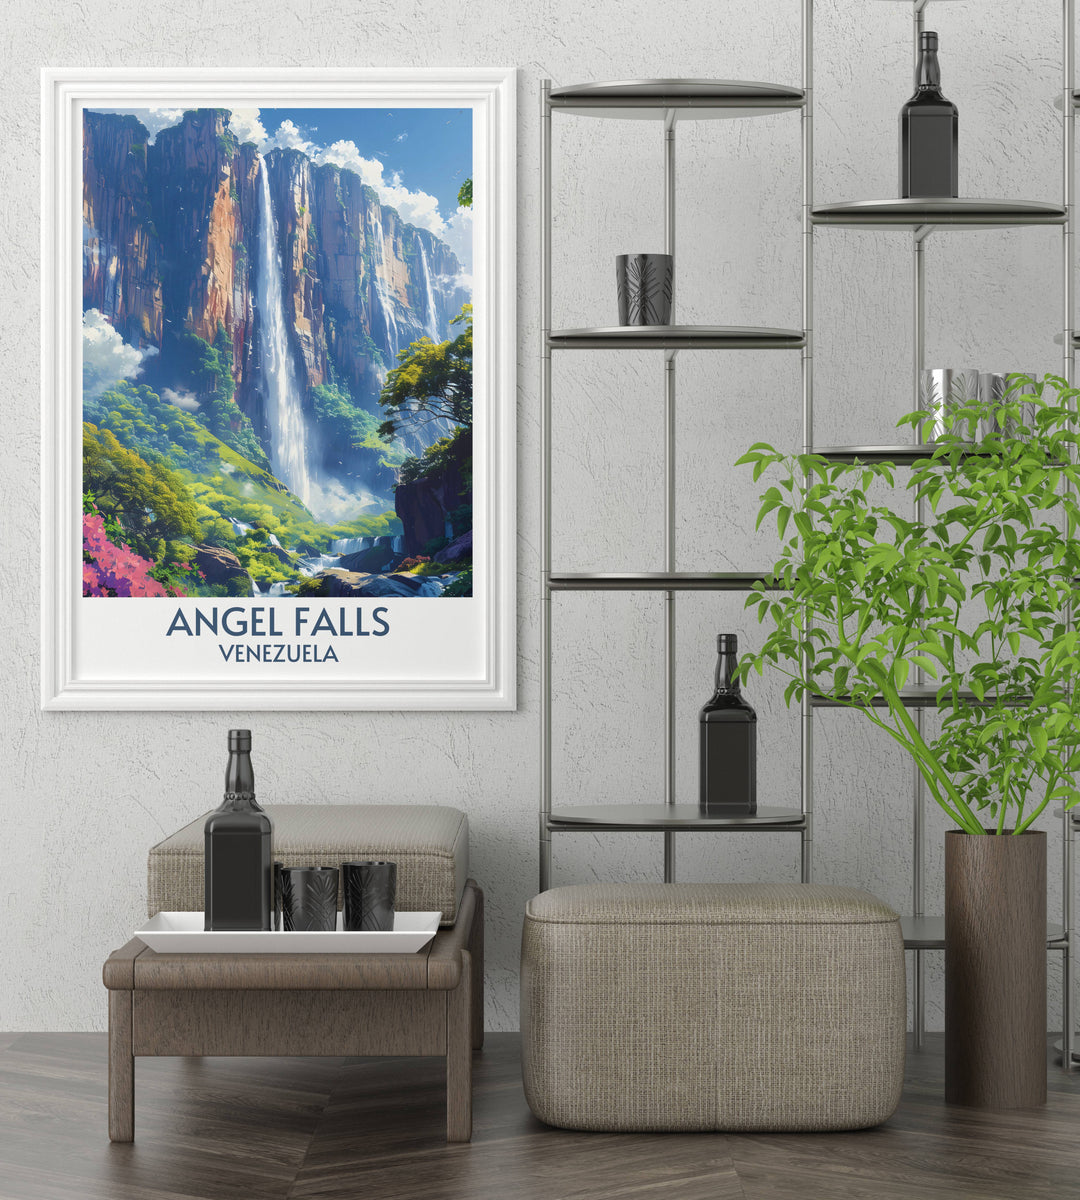 Wall art featuring Angel Falls, a natural wonder of Venezuela, artistically captured in a stunning print.